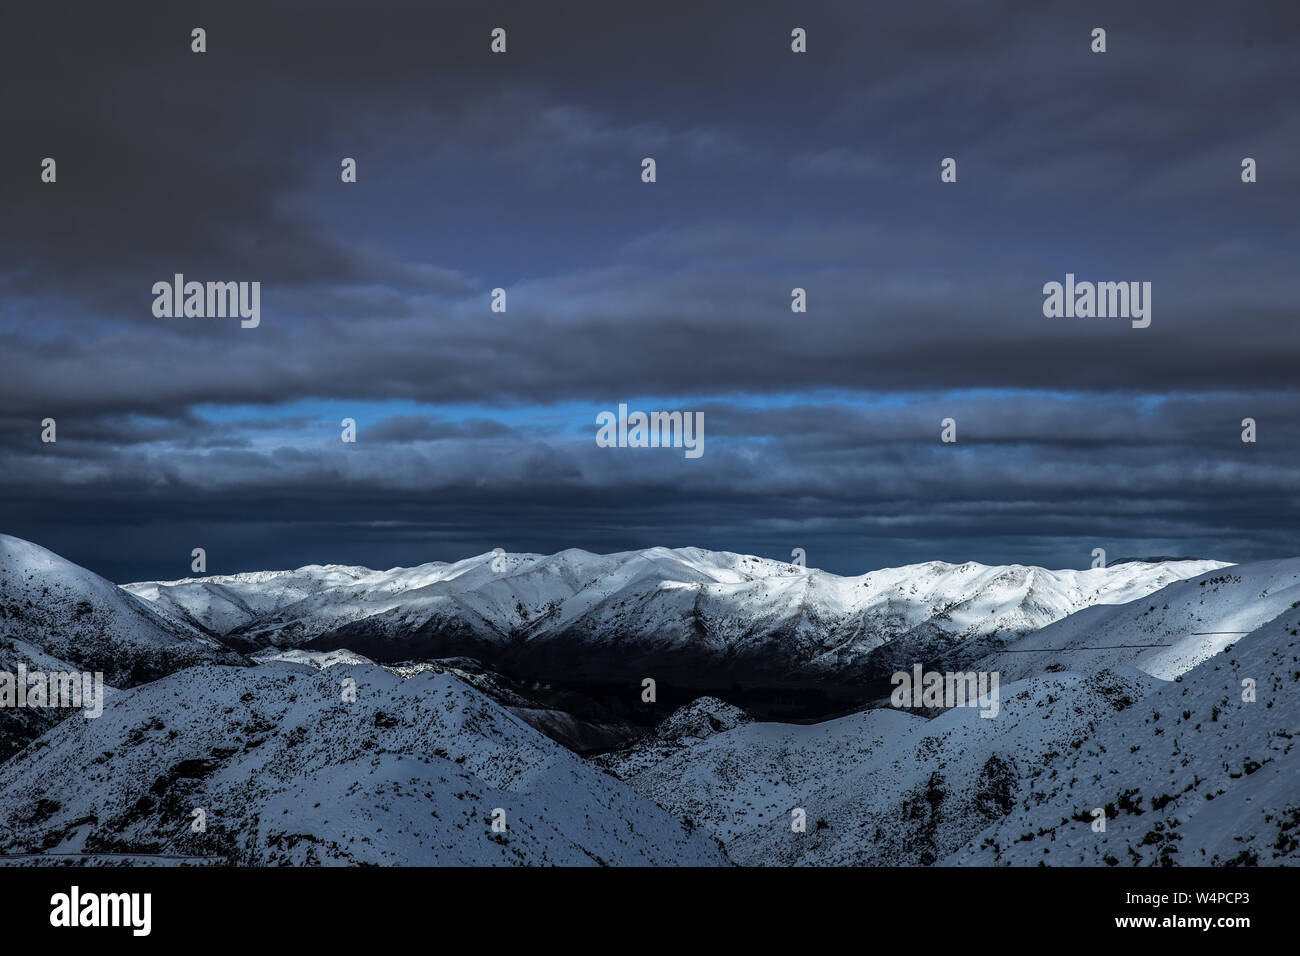 Mountain Snow Winter Landscape, High Altitude Alpine Peaks, New Zealand Landscape Stock Photo